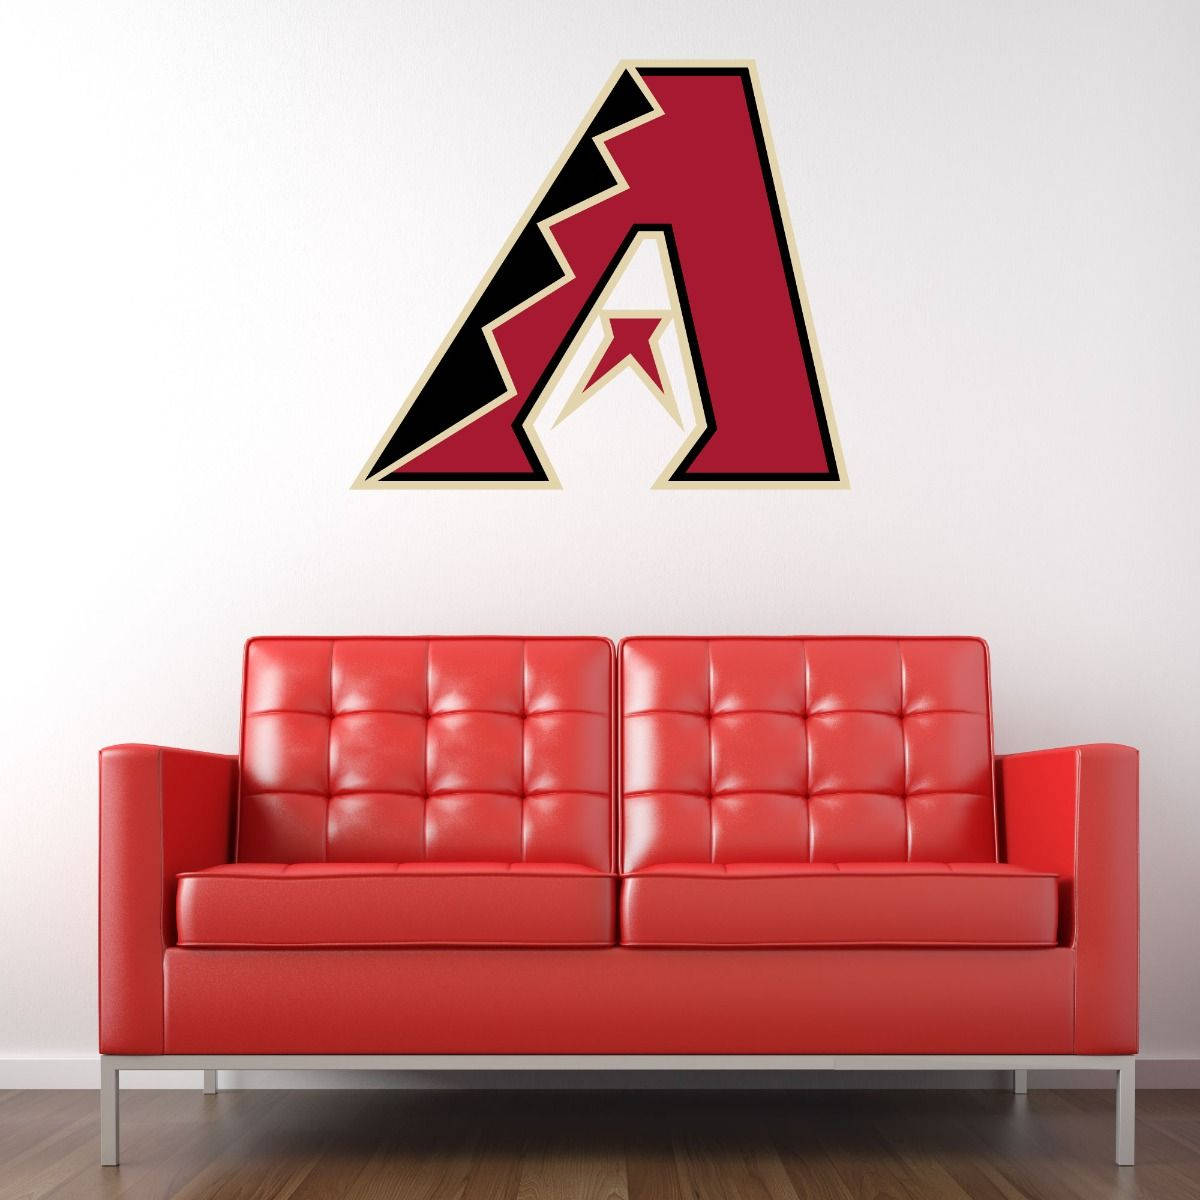 Arizona Diamondbacks With Red Sofa Background